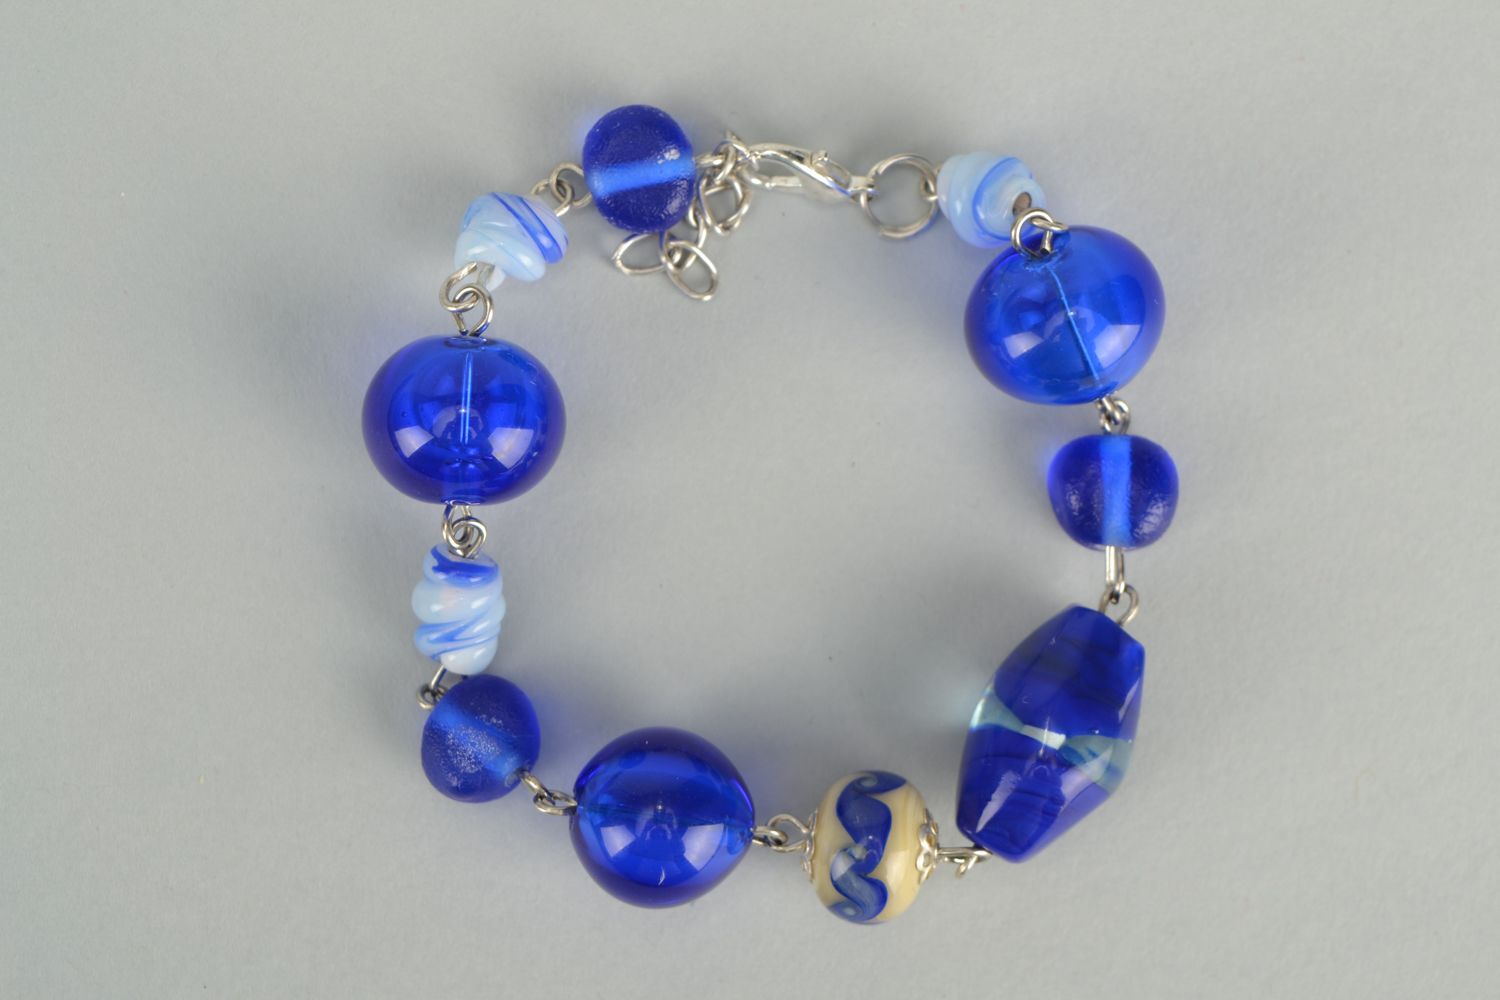 Interesting bracelet with blue lampwork glass beads photo 1